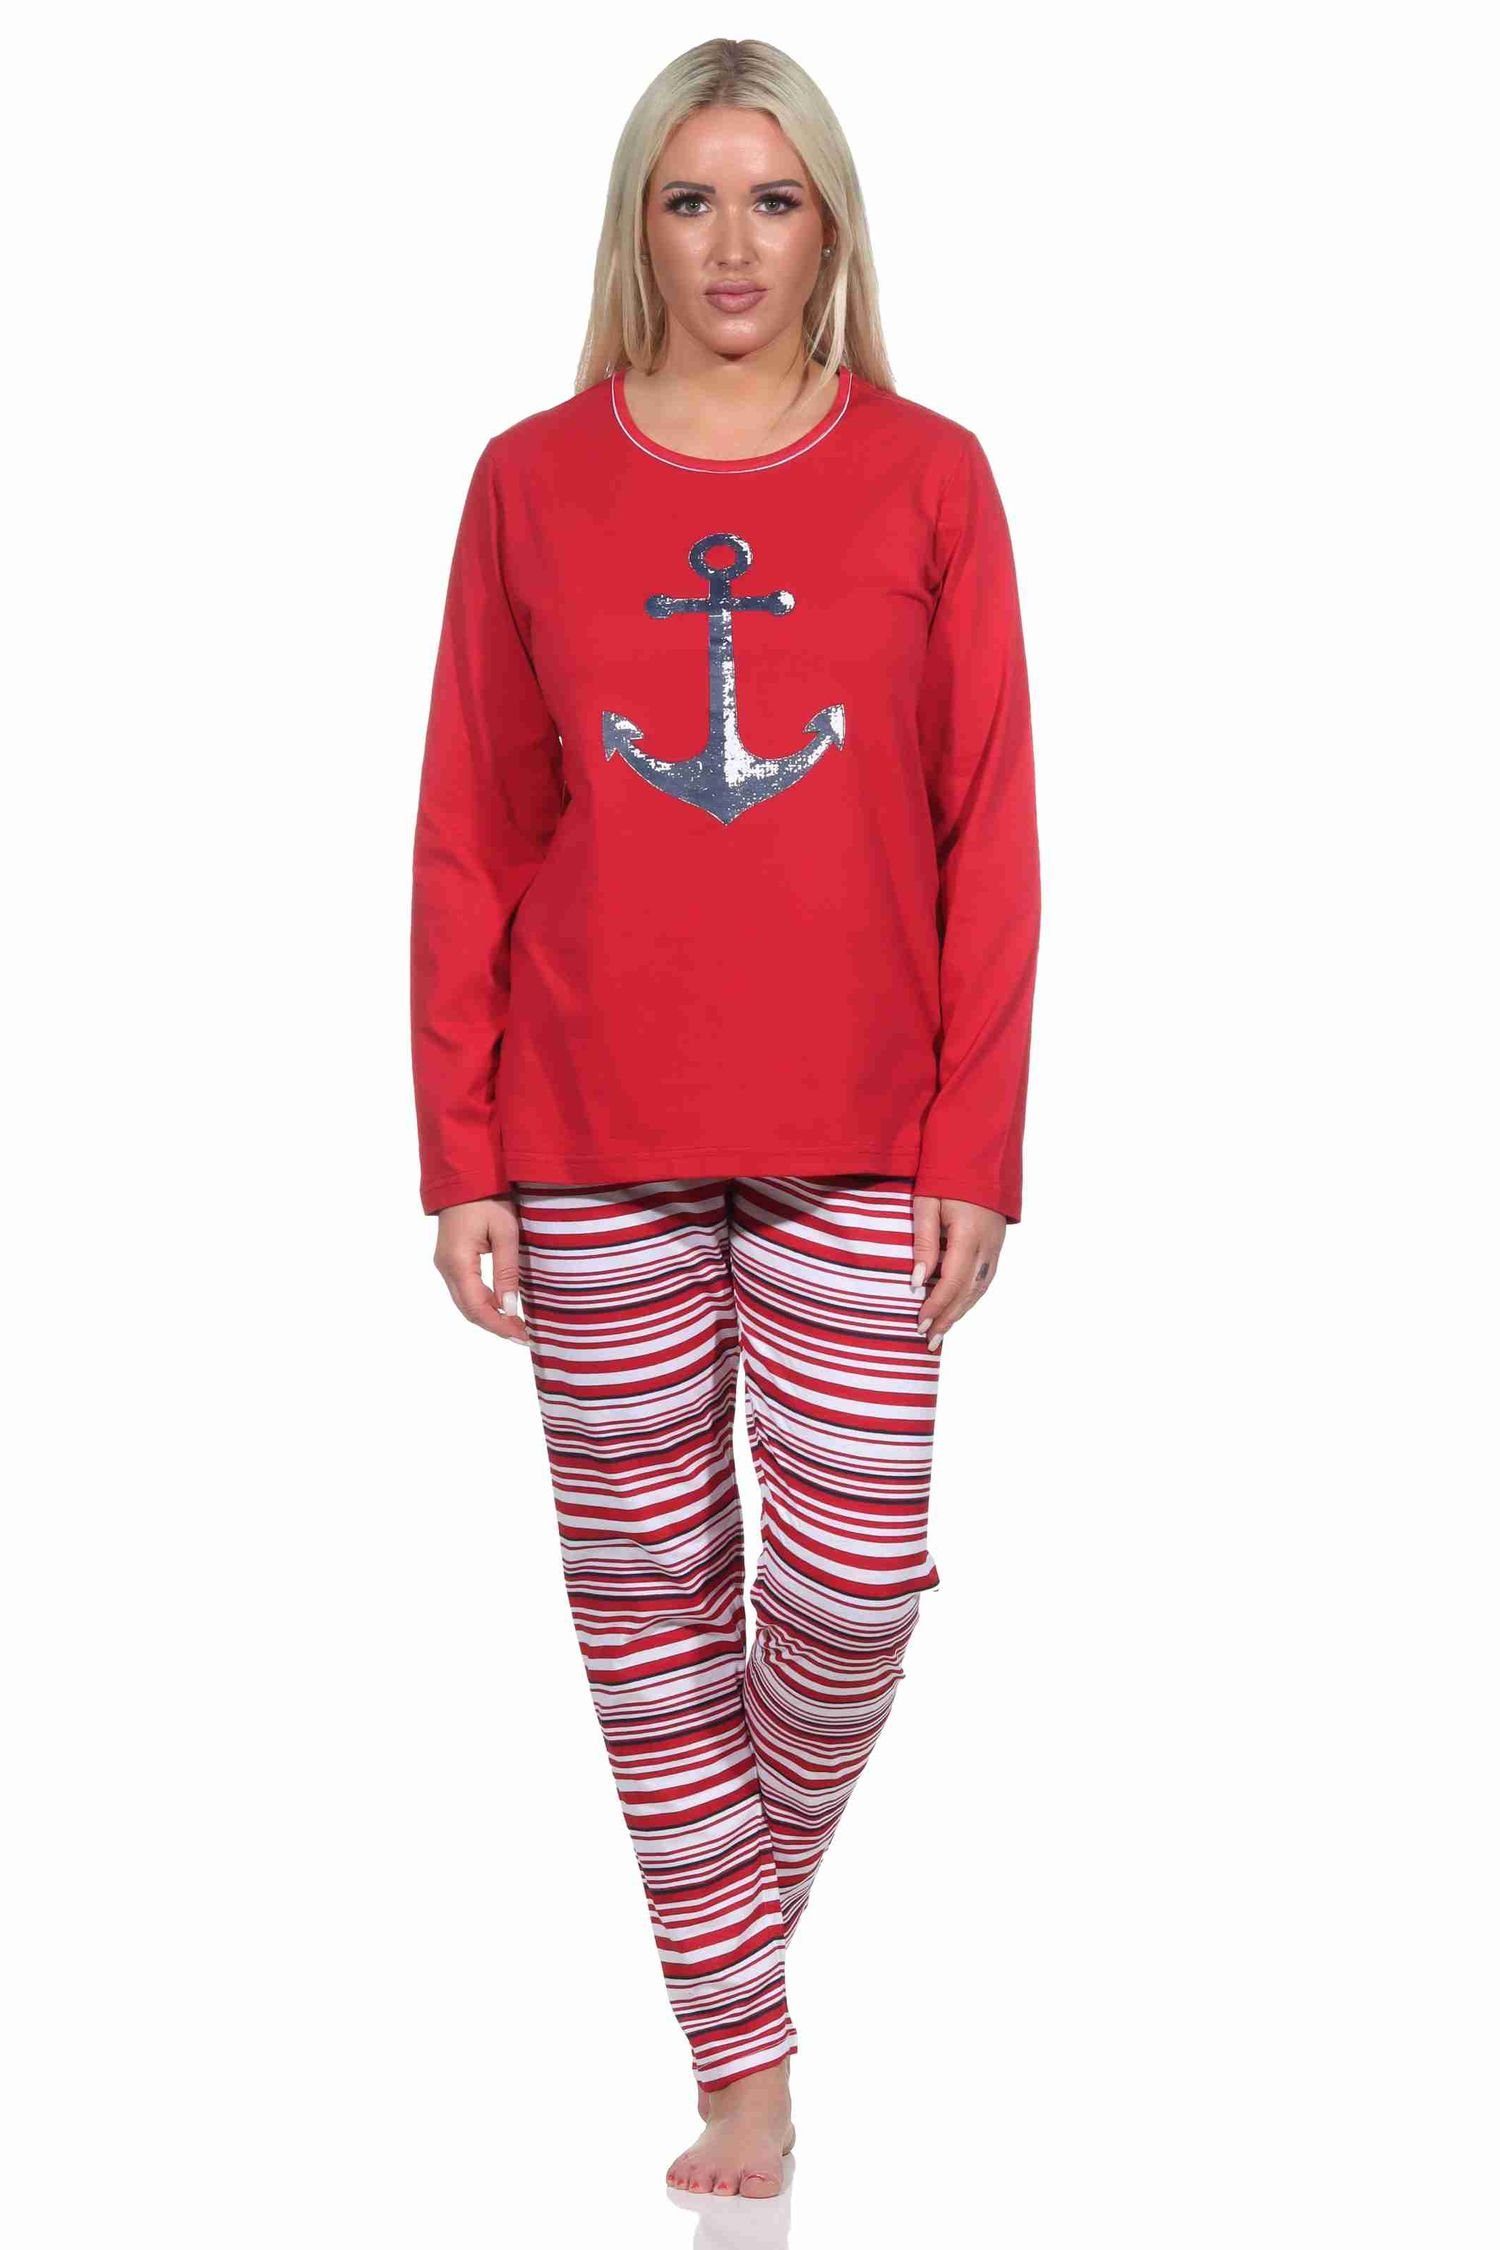 Normann Pyjama Damen langarm Schlafanzug in maritimer Optik, Oberteil mit Ankermotiv rot